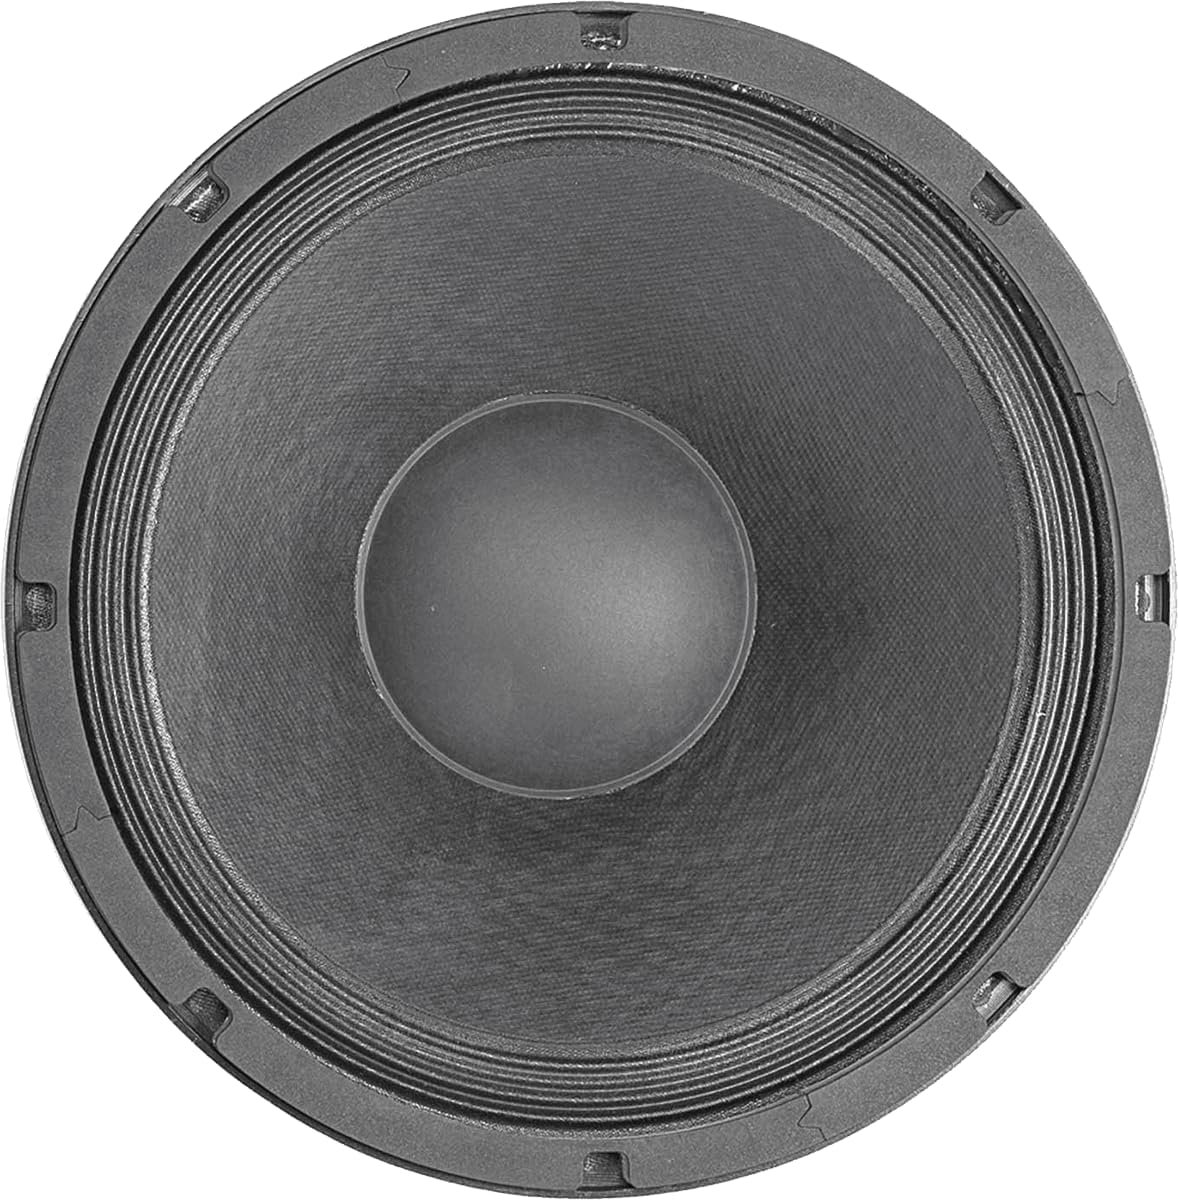 Kappapro-12a 12" Pro Mid Bass Speaker (kappapro12a) - image 2 of 3